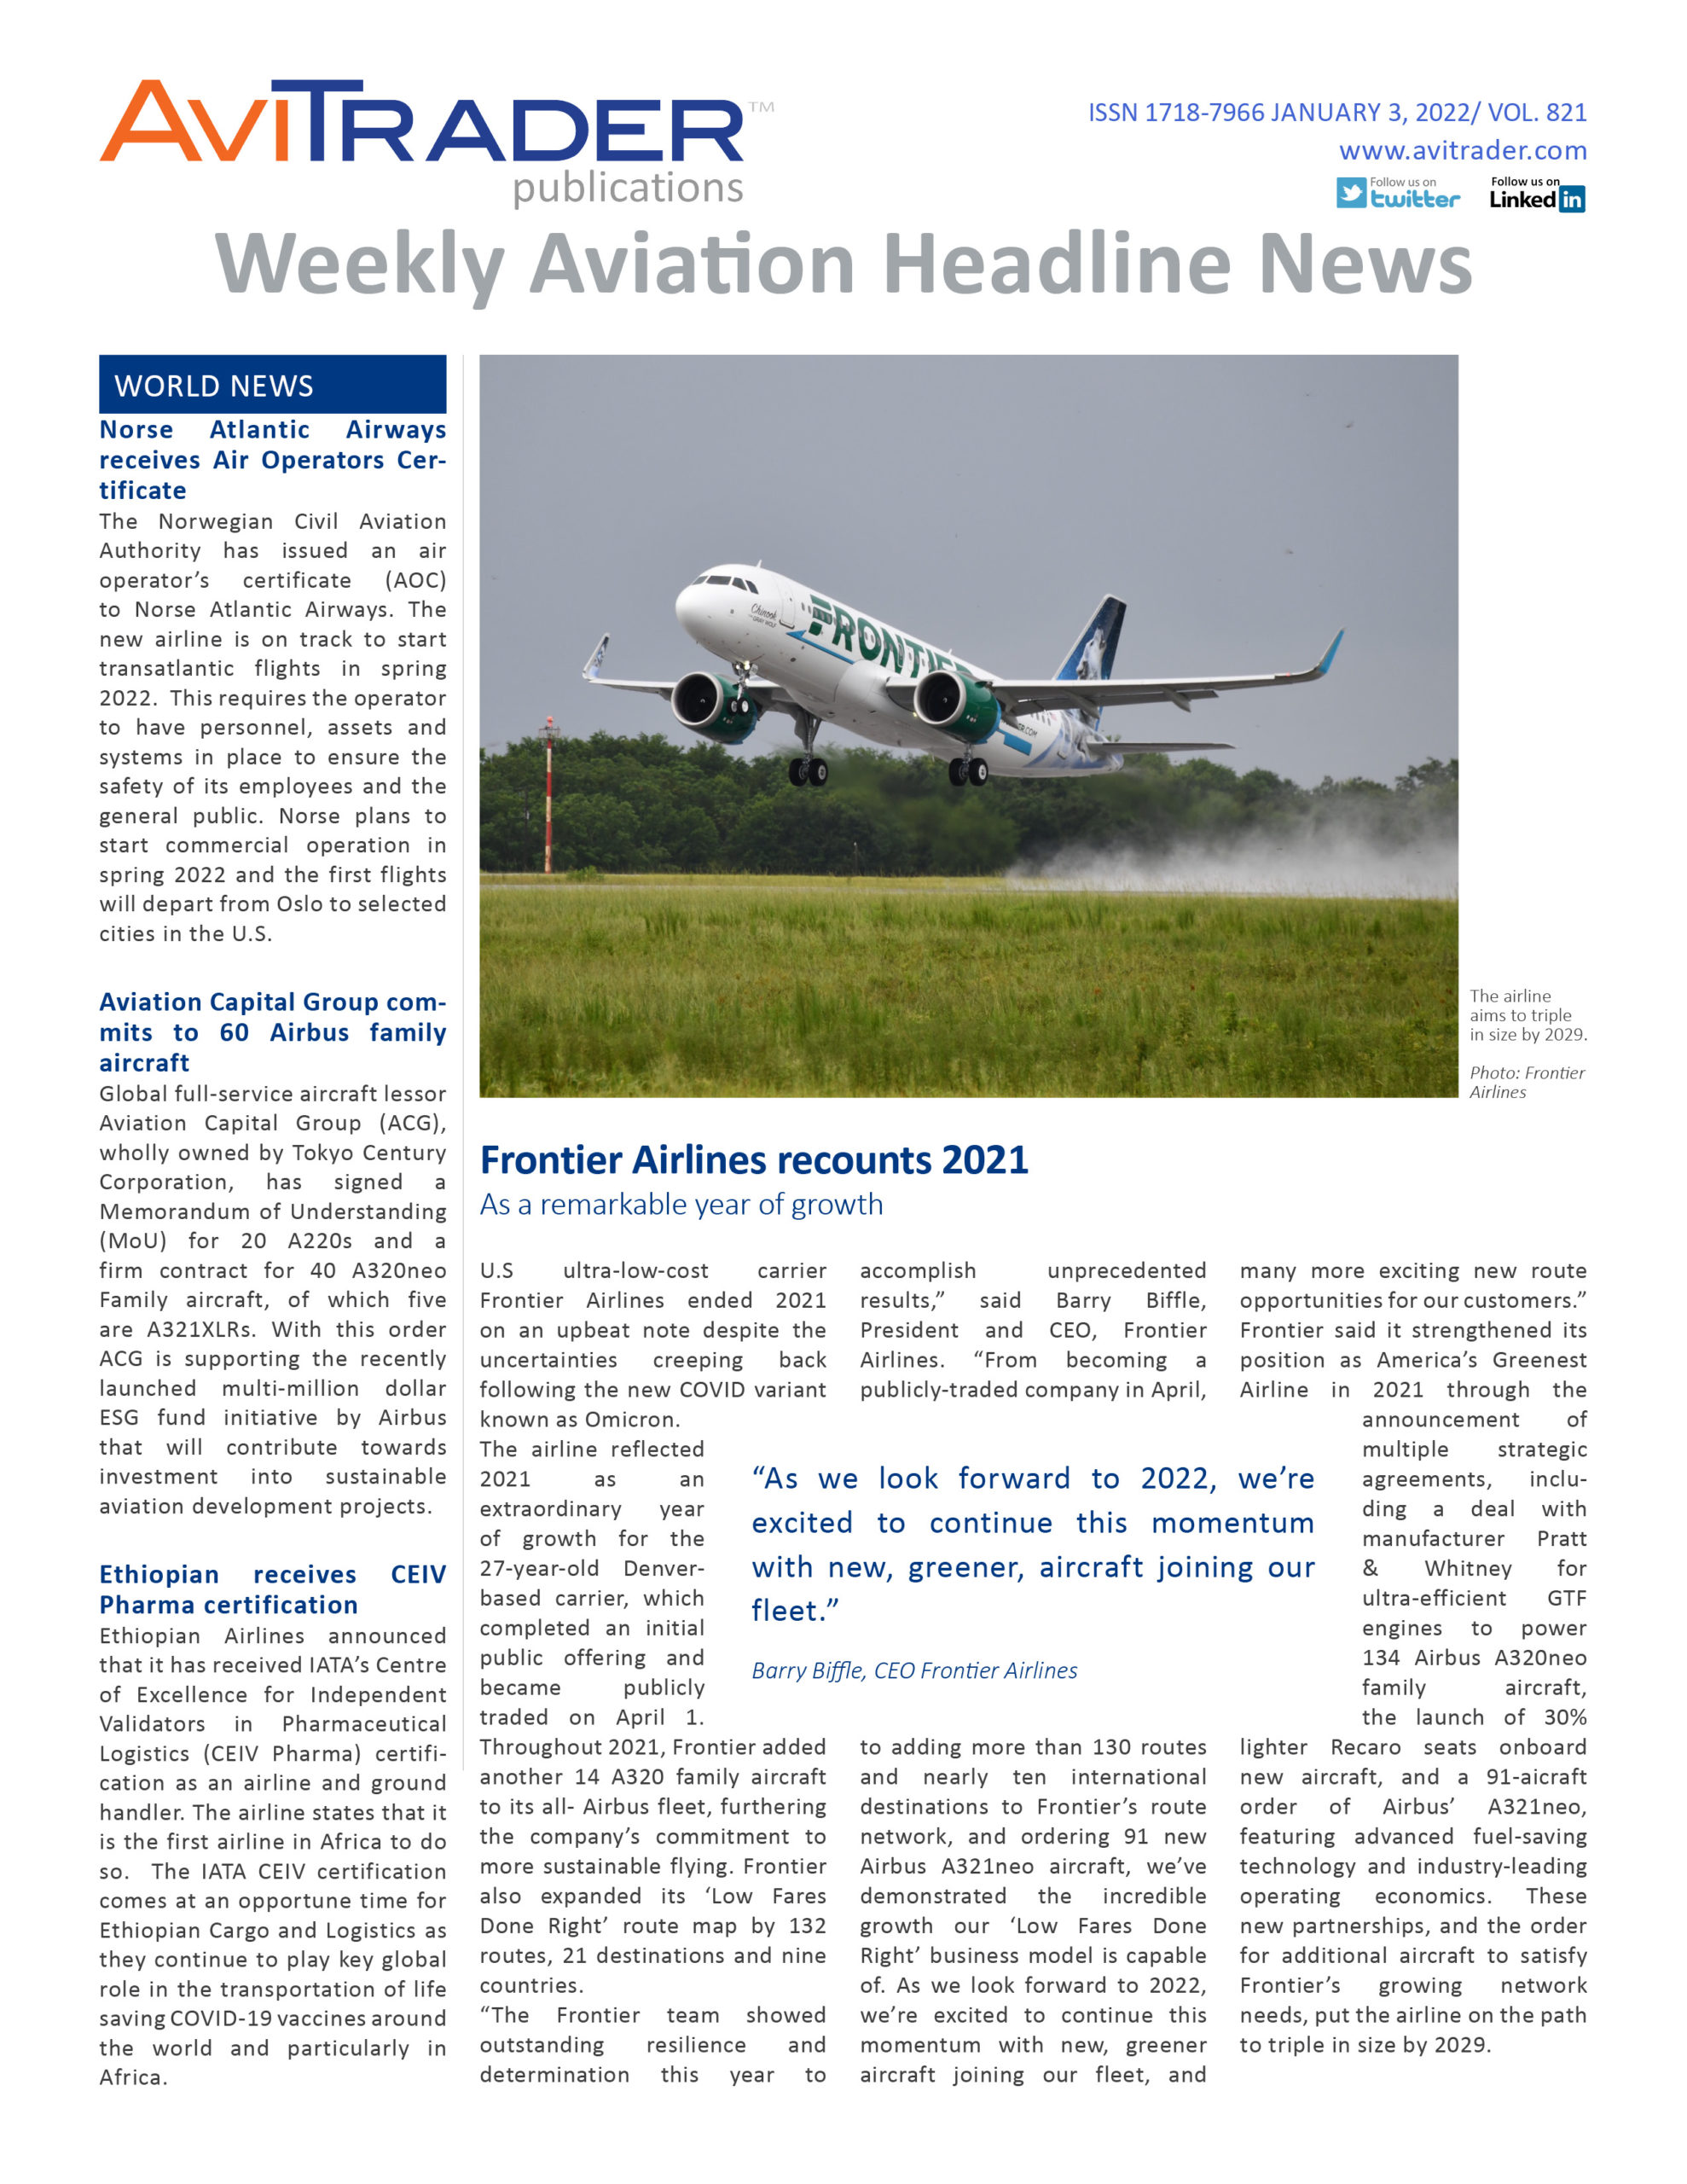 AviTrader_Weekly_Headline_News_Cover_2022-01-03